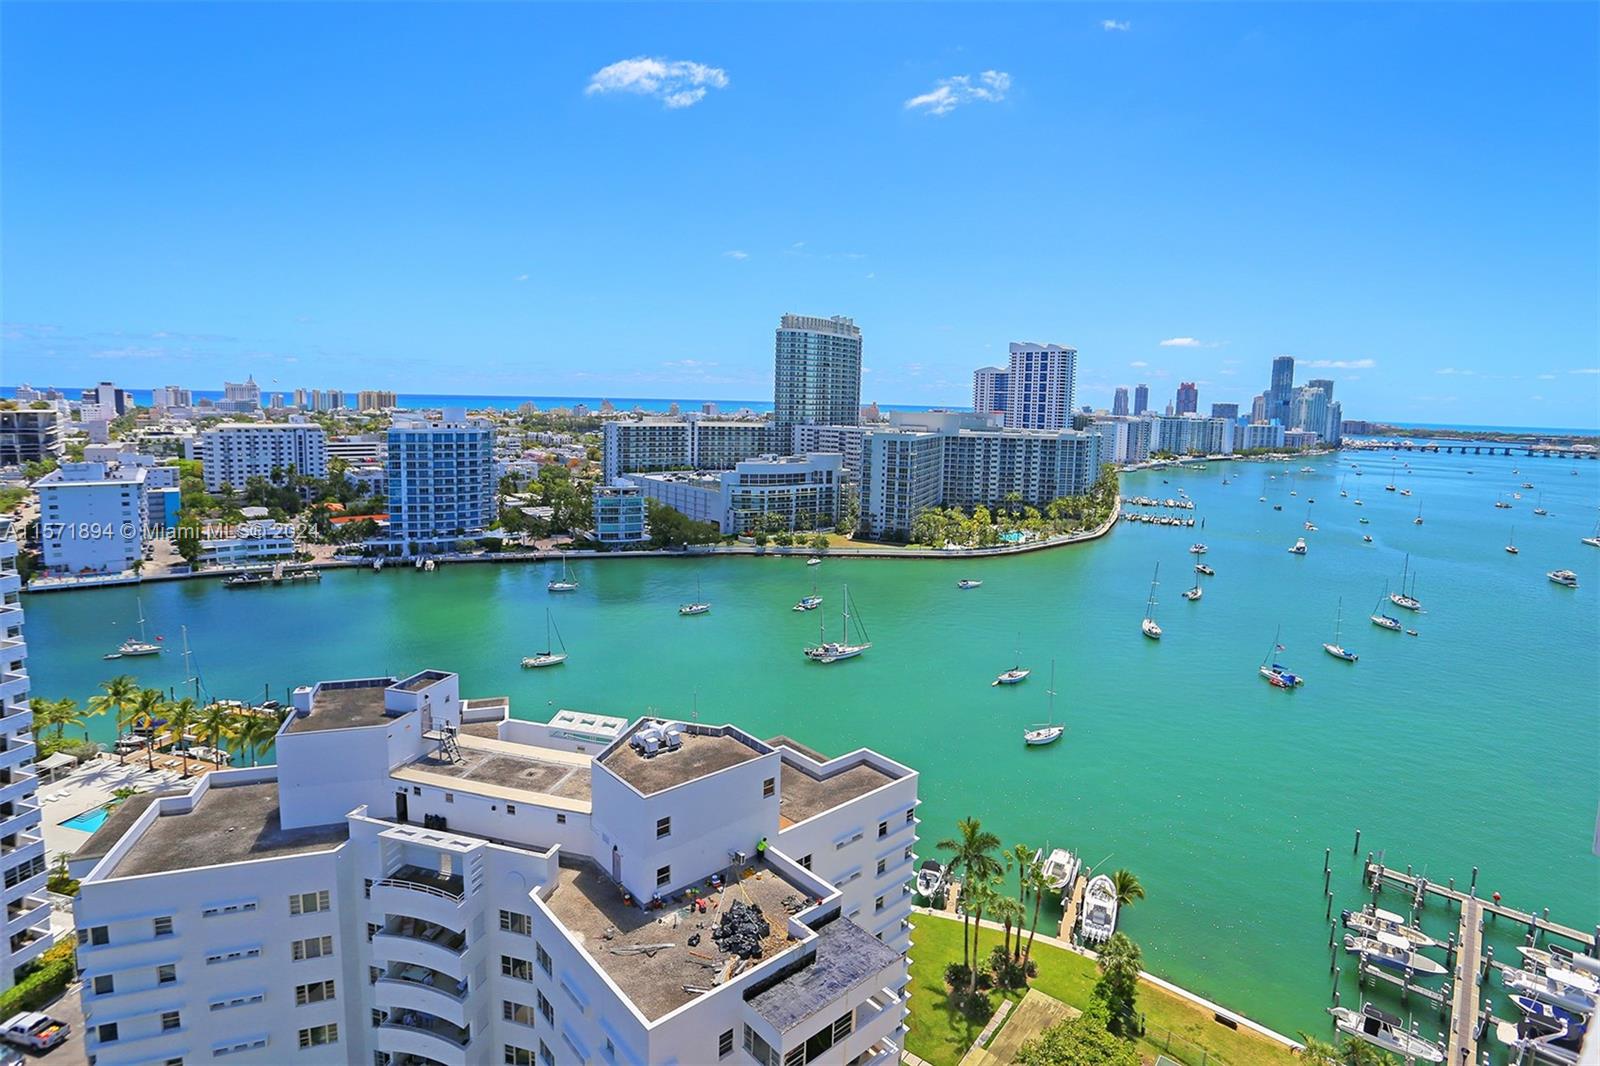 Property for Sale at 11 Island Ave Ph8, Miami Beach, Miami-Dade County, Florida - Bedrooms: 3 
Bathrooms: 4  - $3,500,000